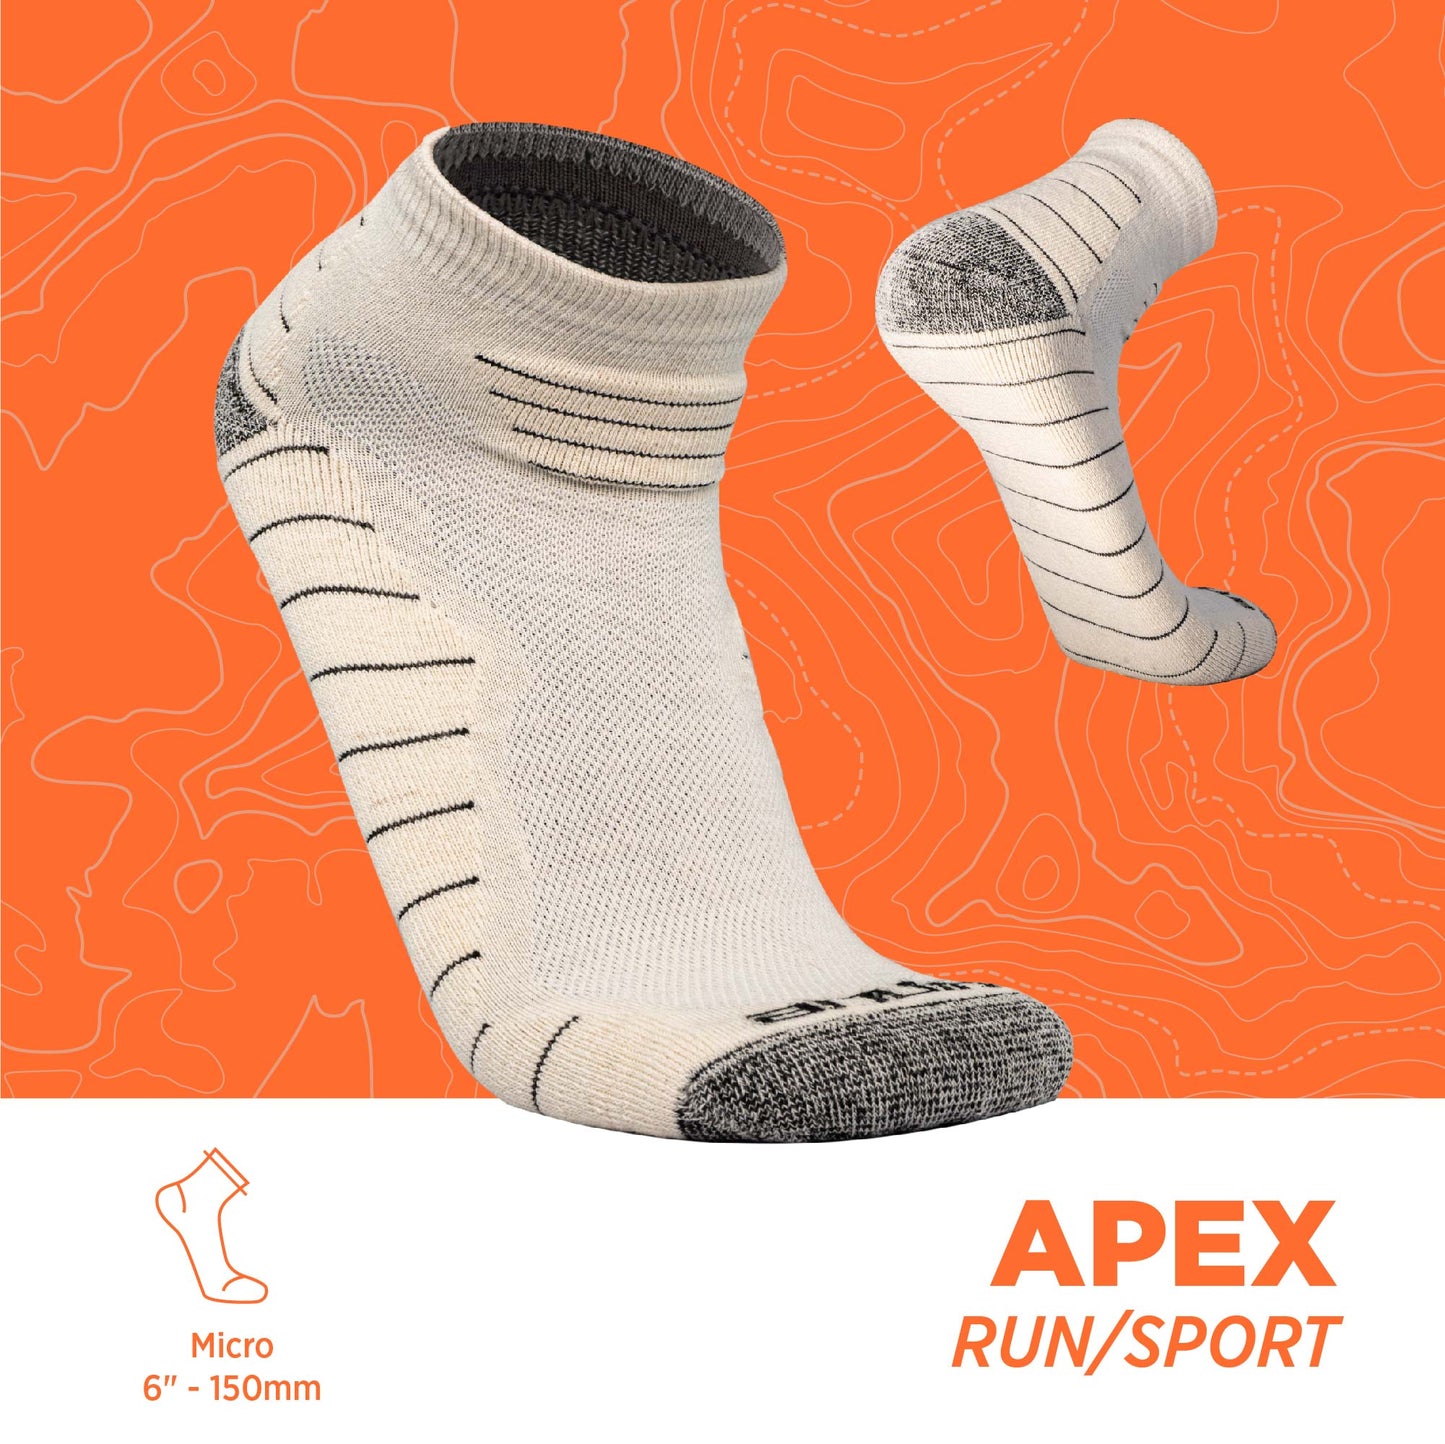 Apex | Run & Sport